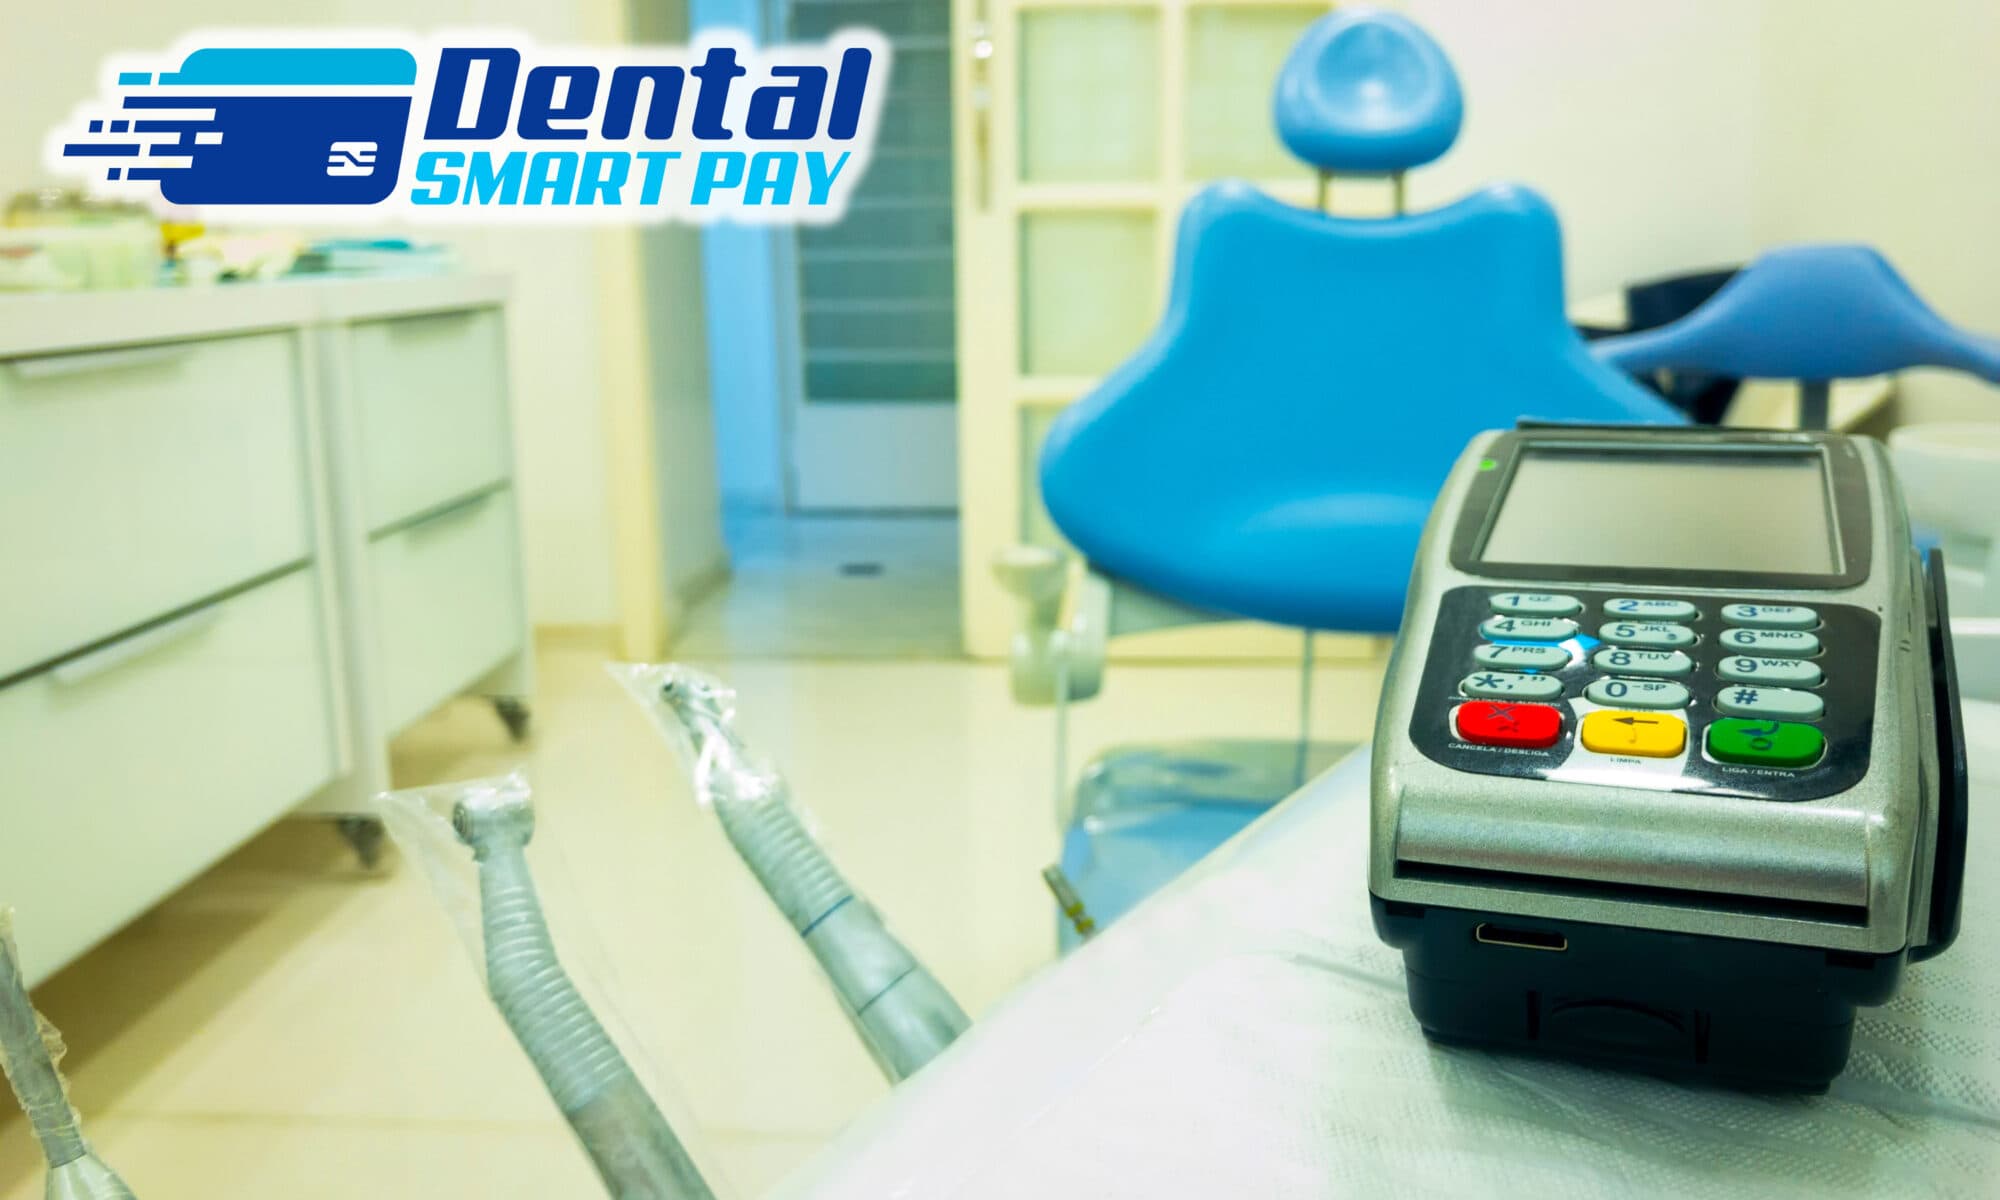 Dental Smart Pay Credit Card Terminal